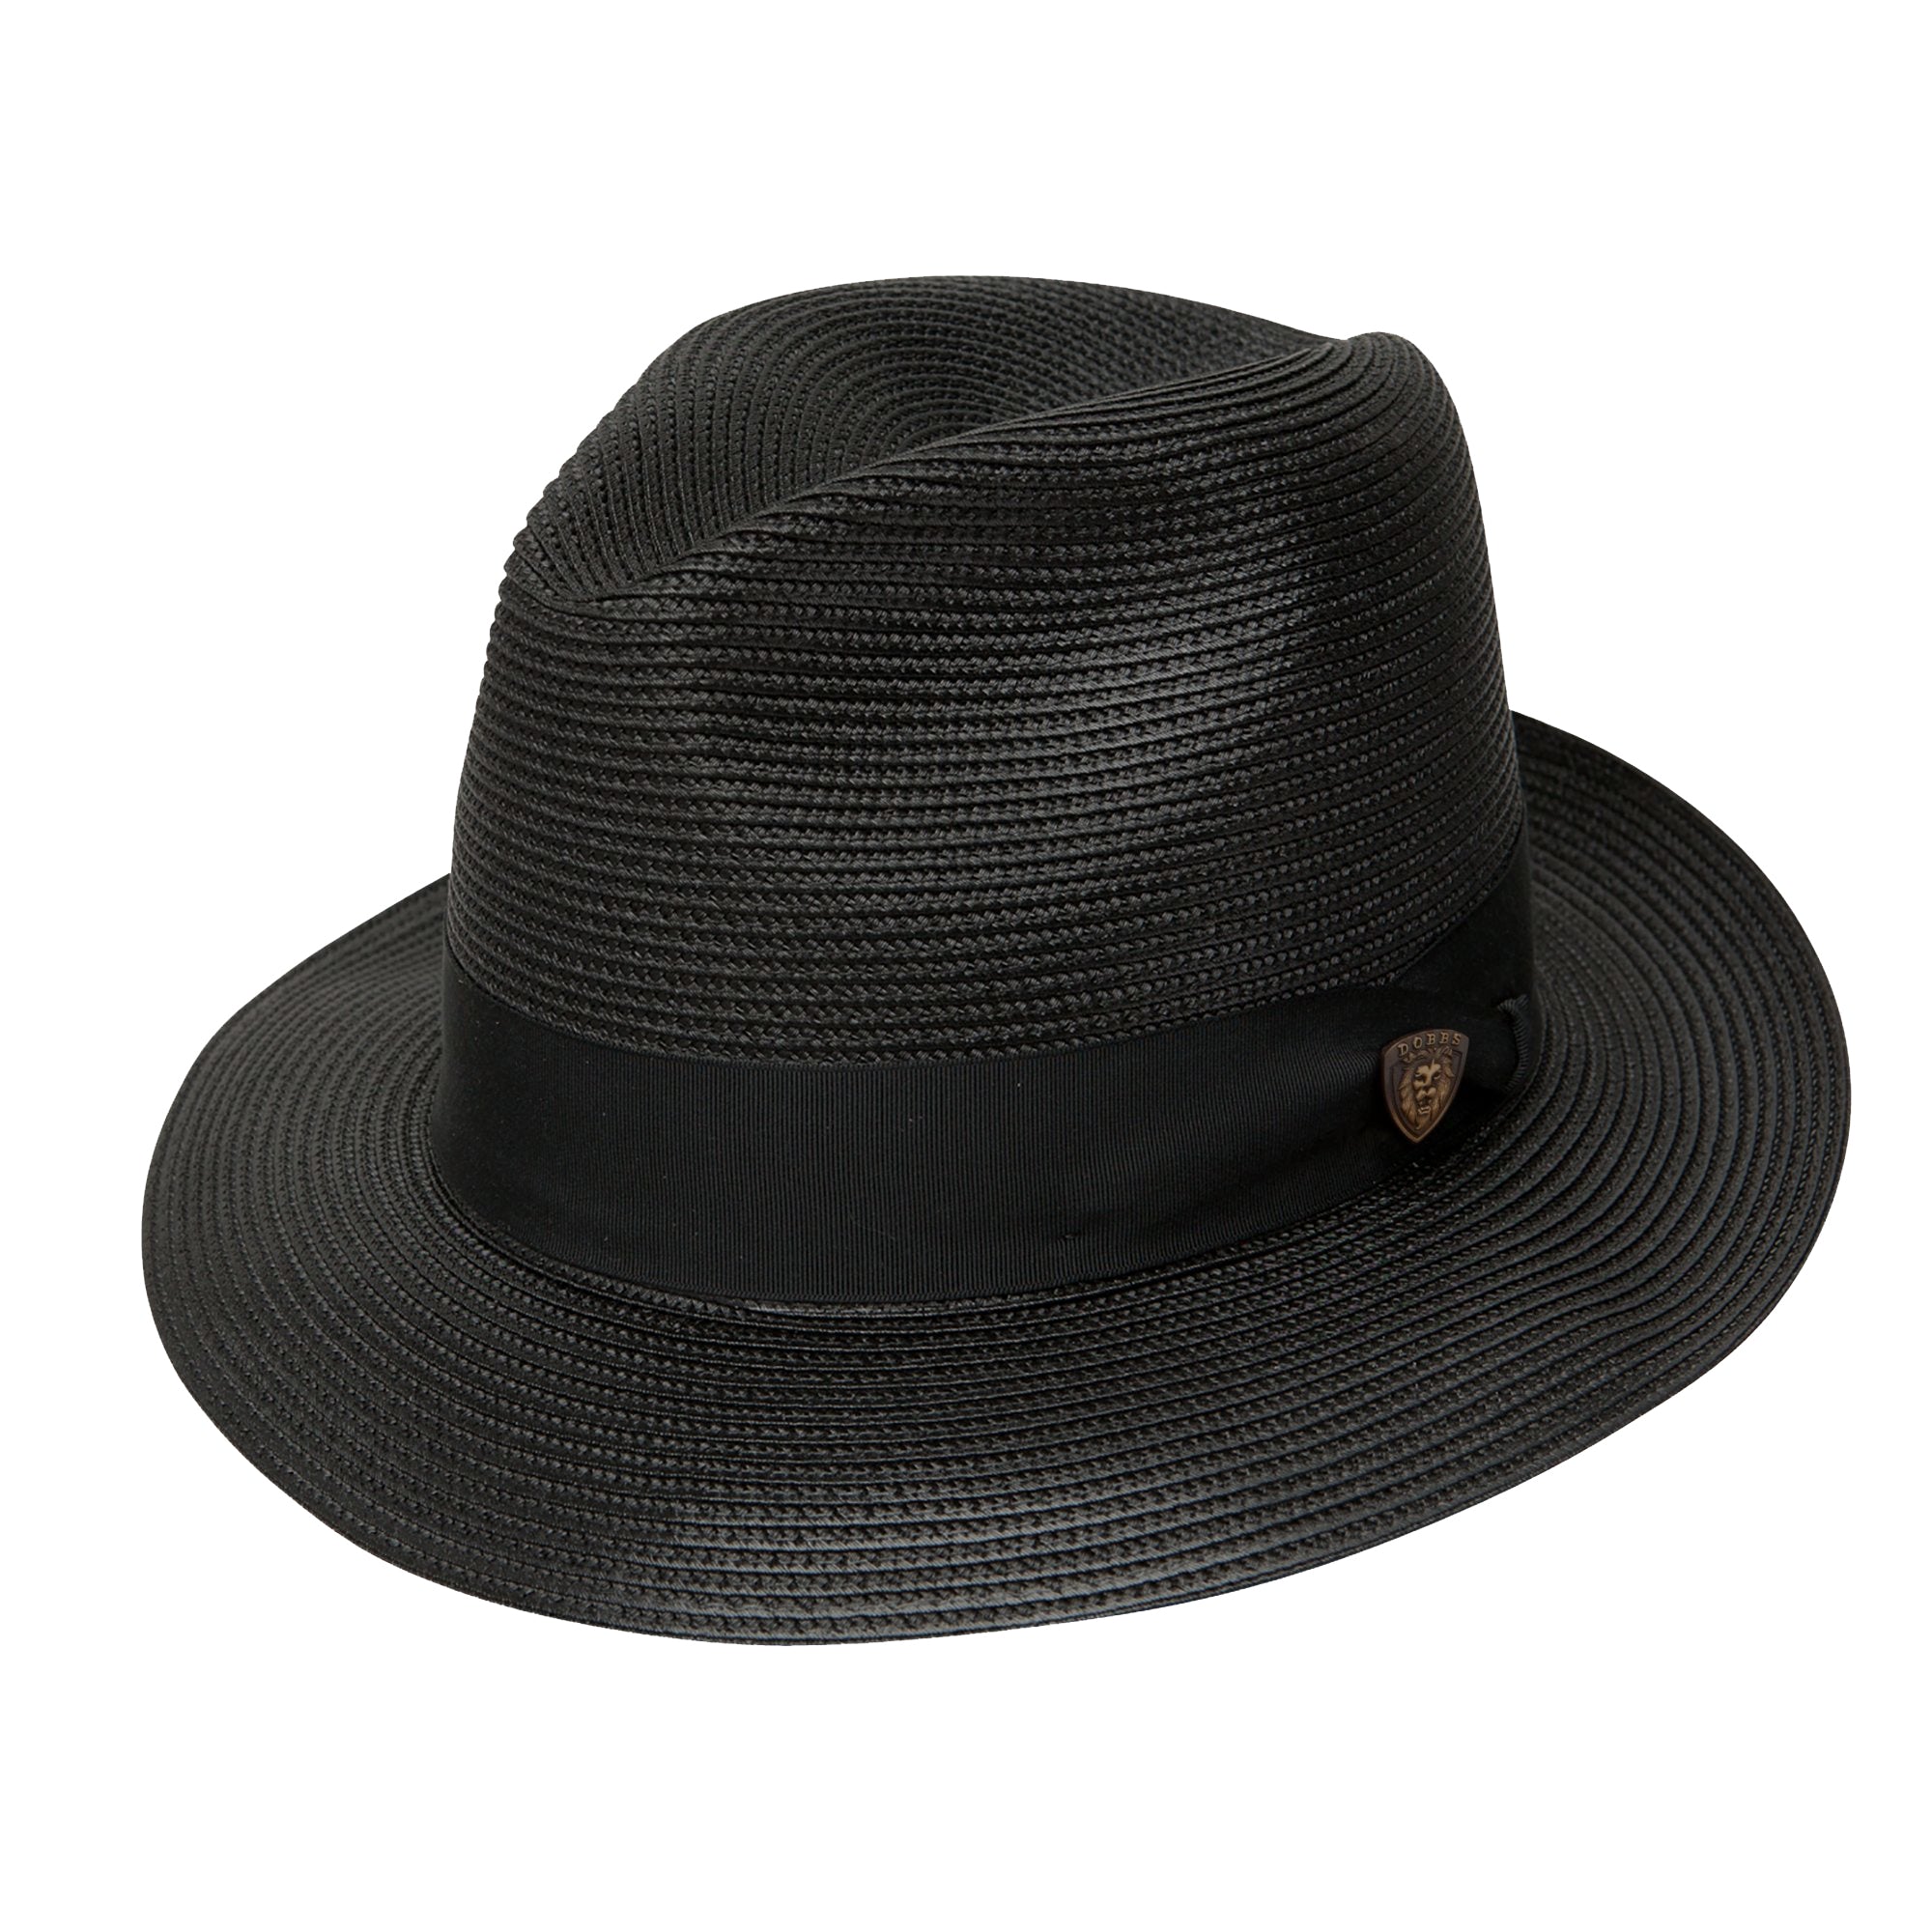 Dobbs Rosebud Straw Fedora Hat in Black